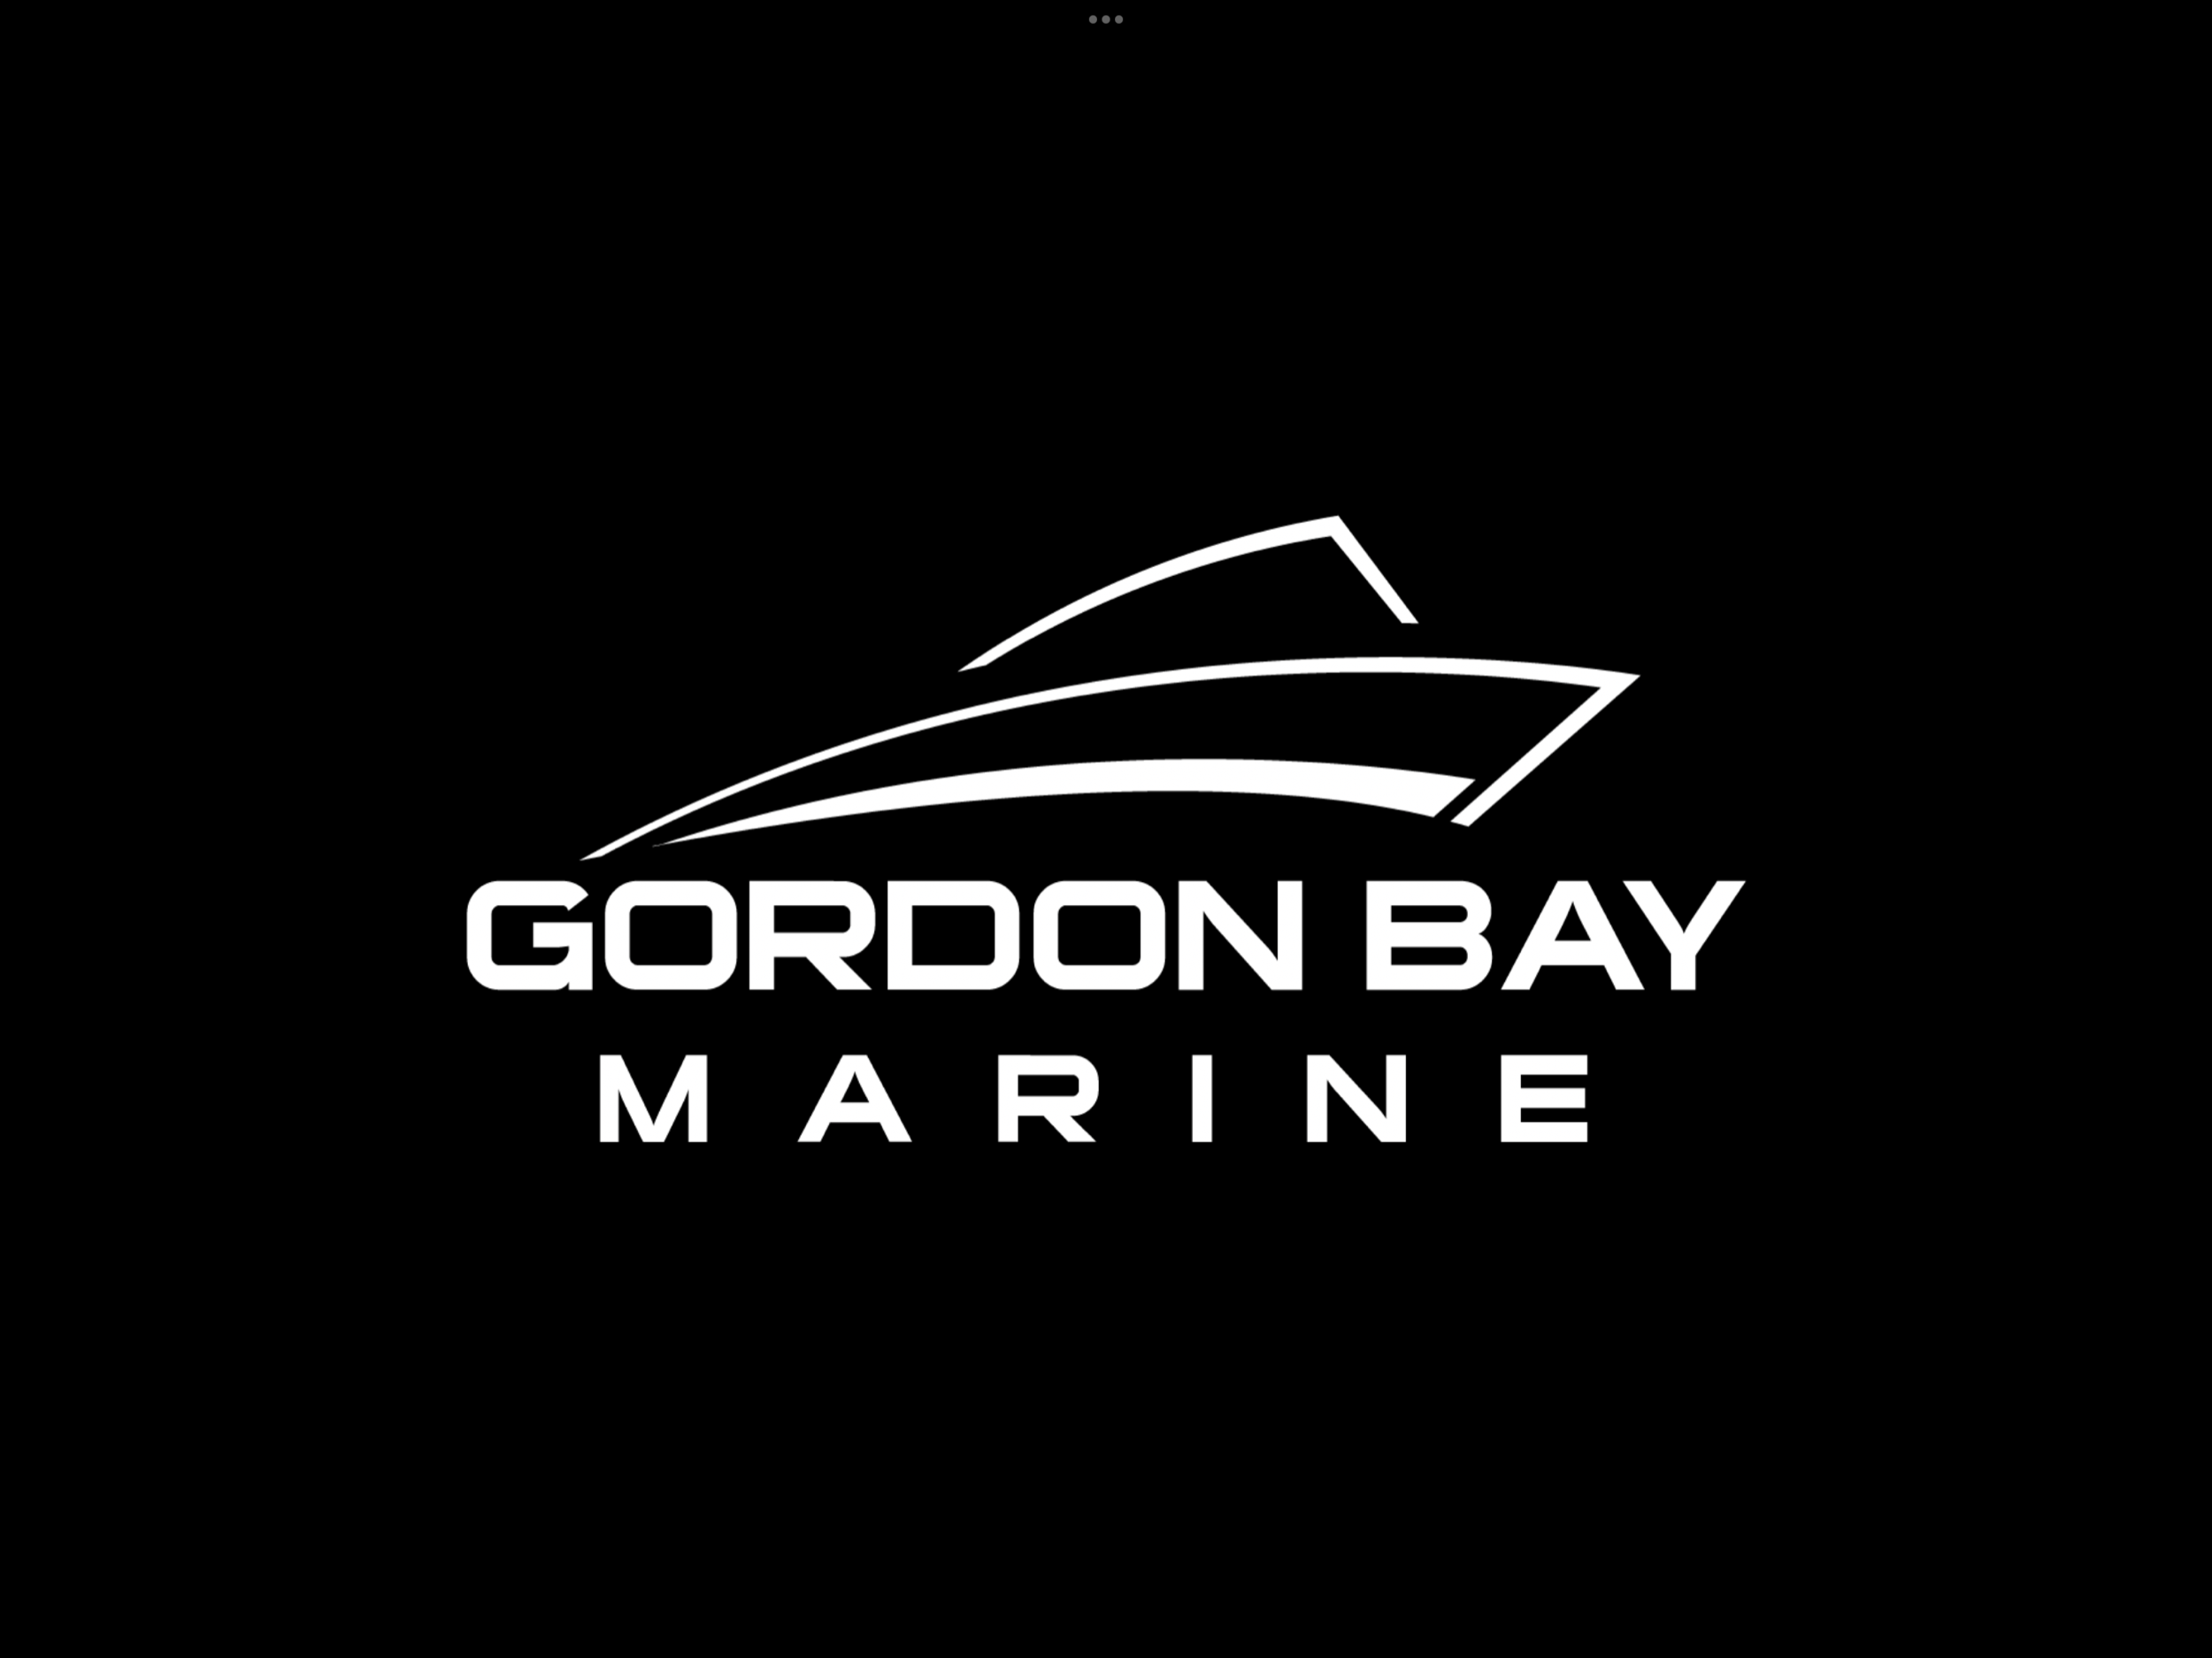 Gordon Bay Marine